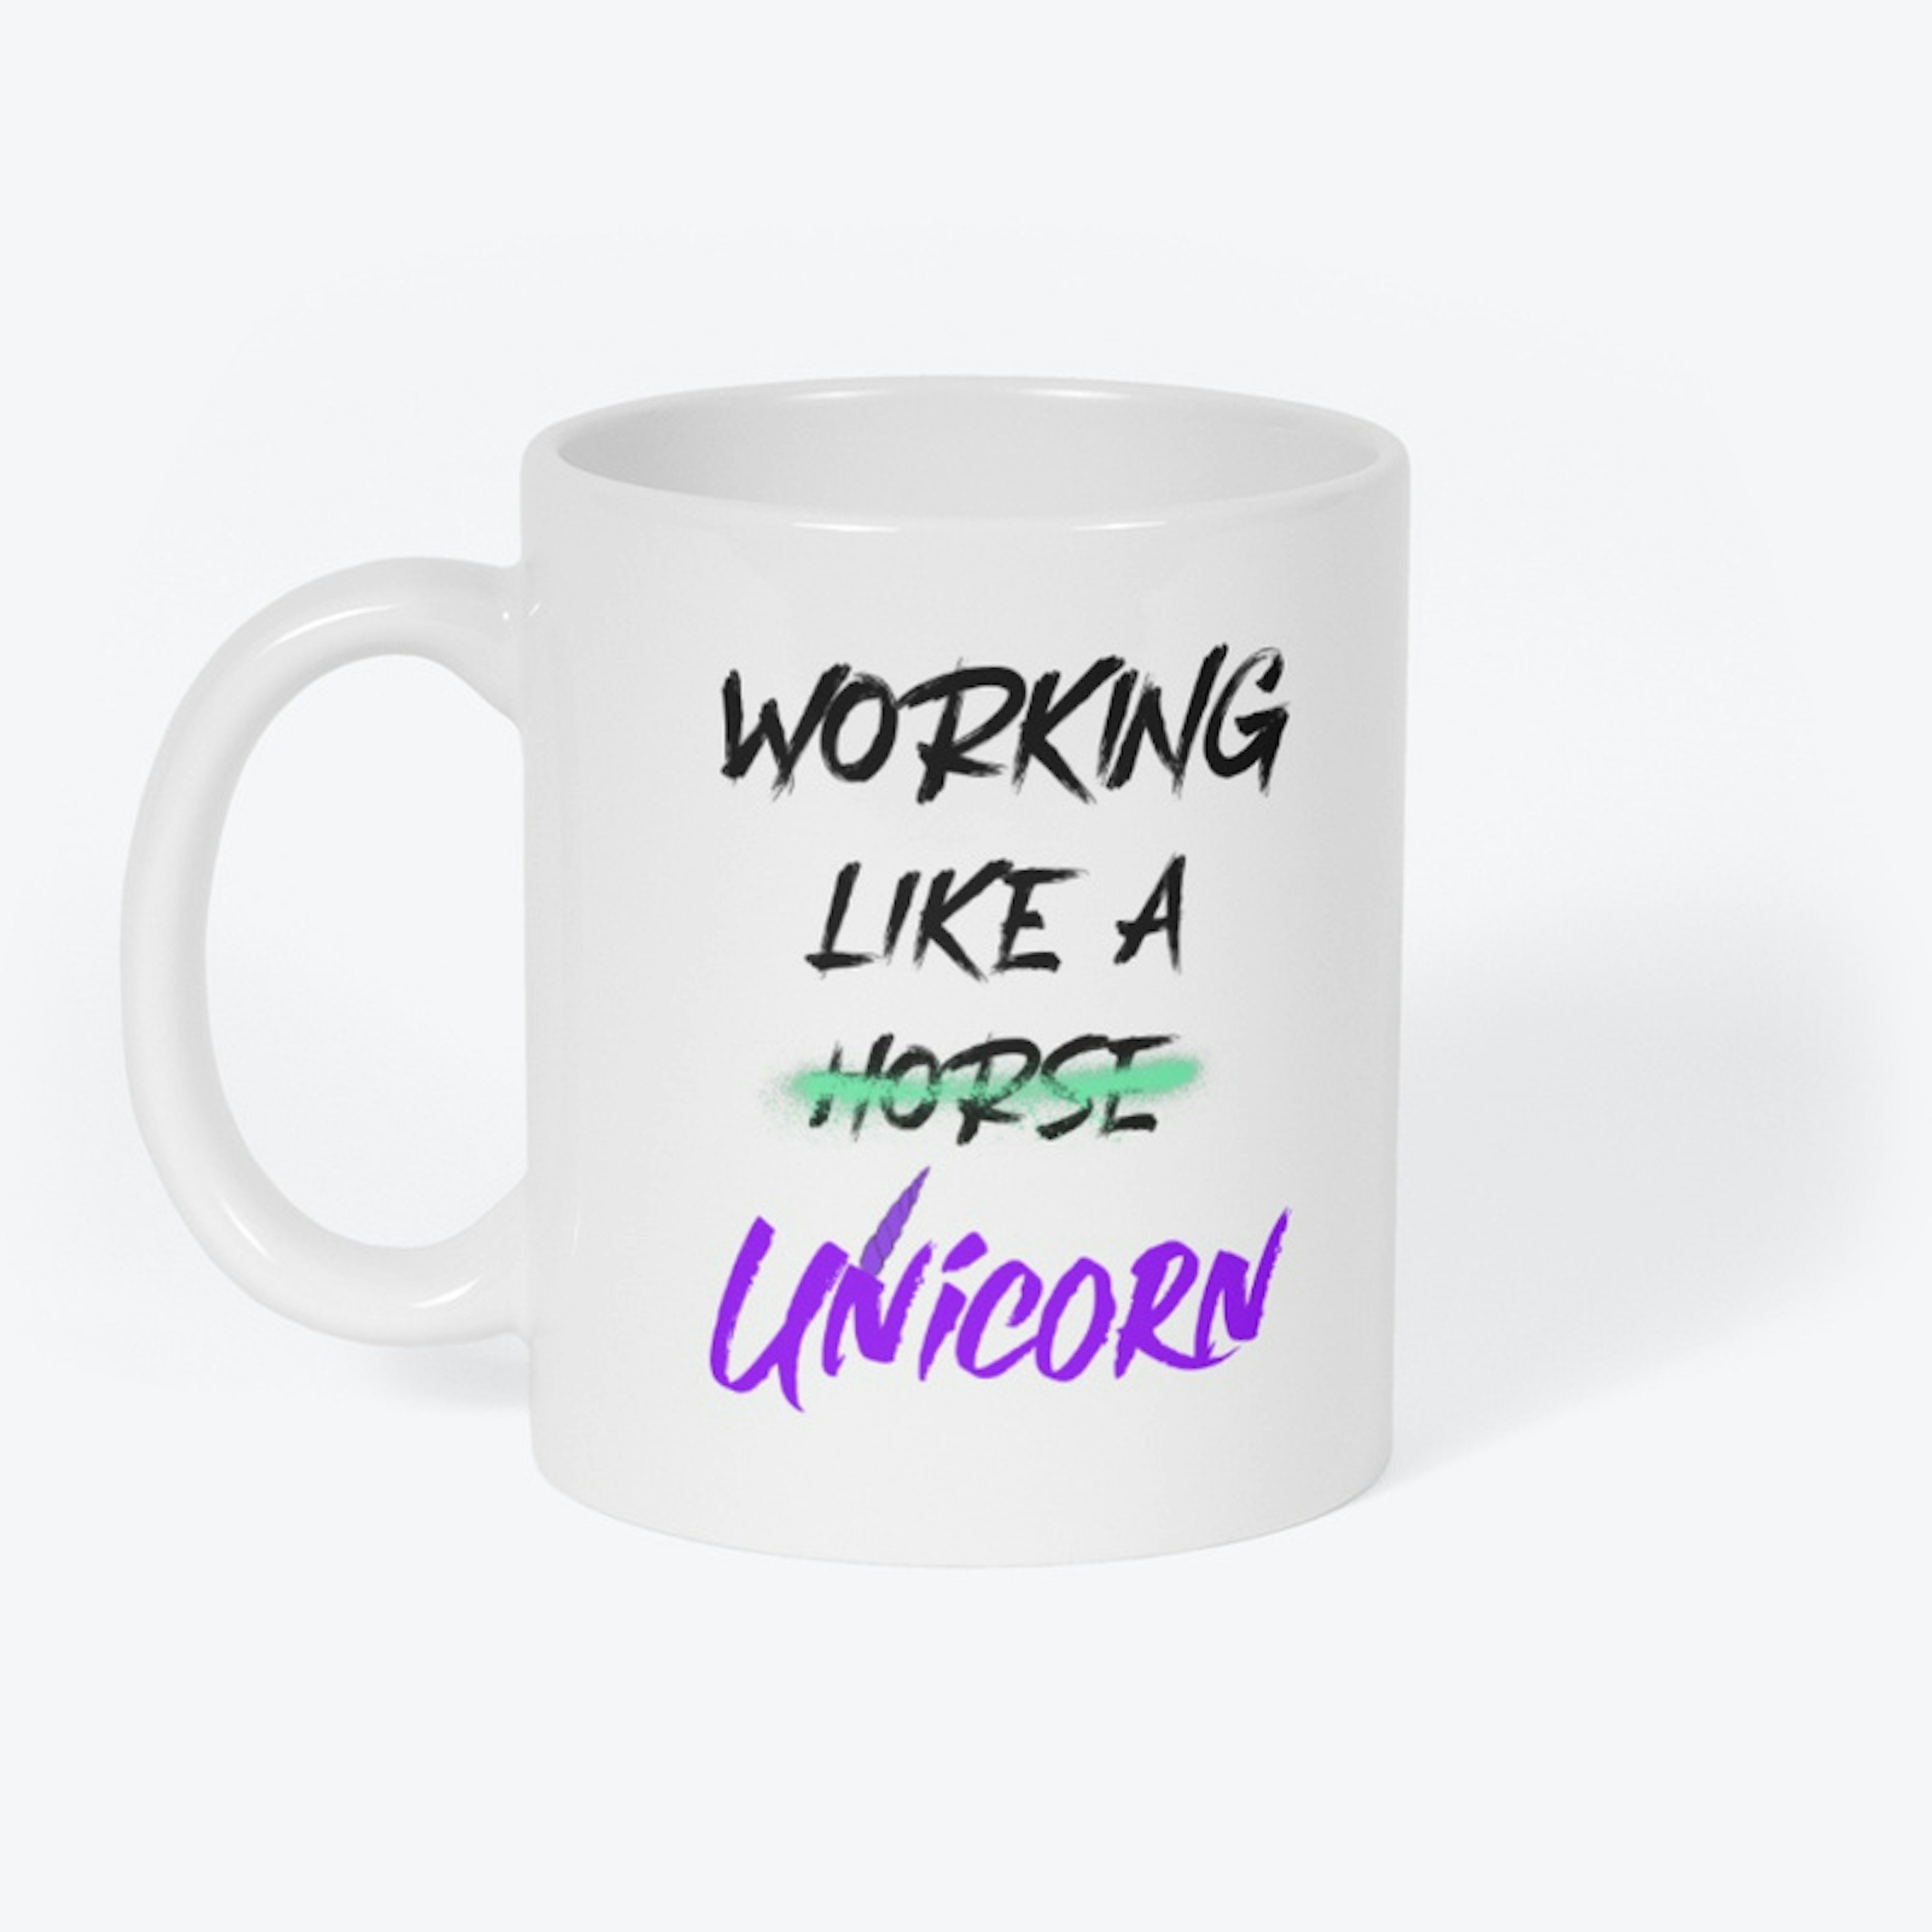 Working like a...unicorn